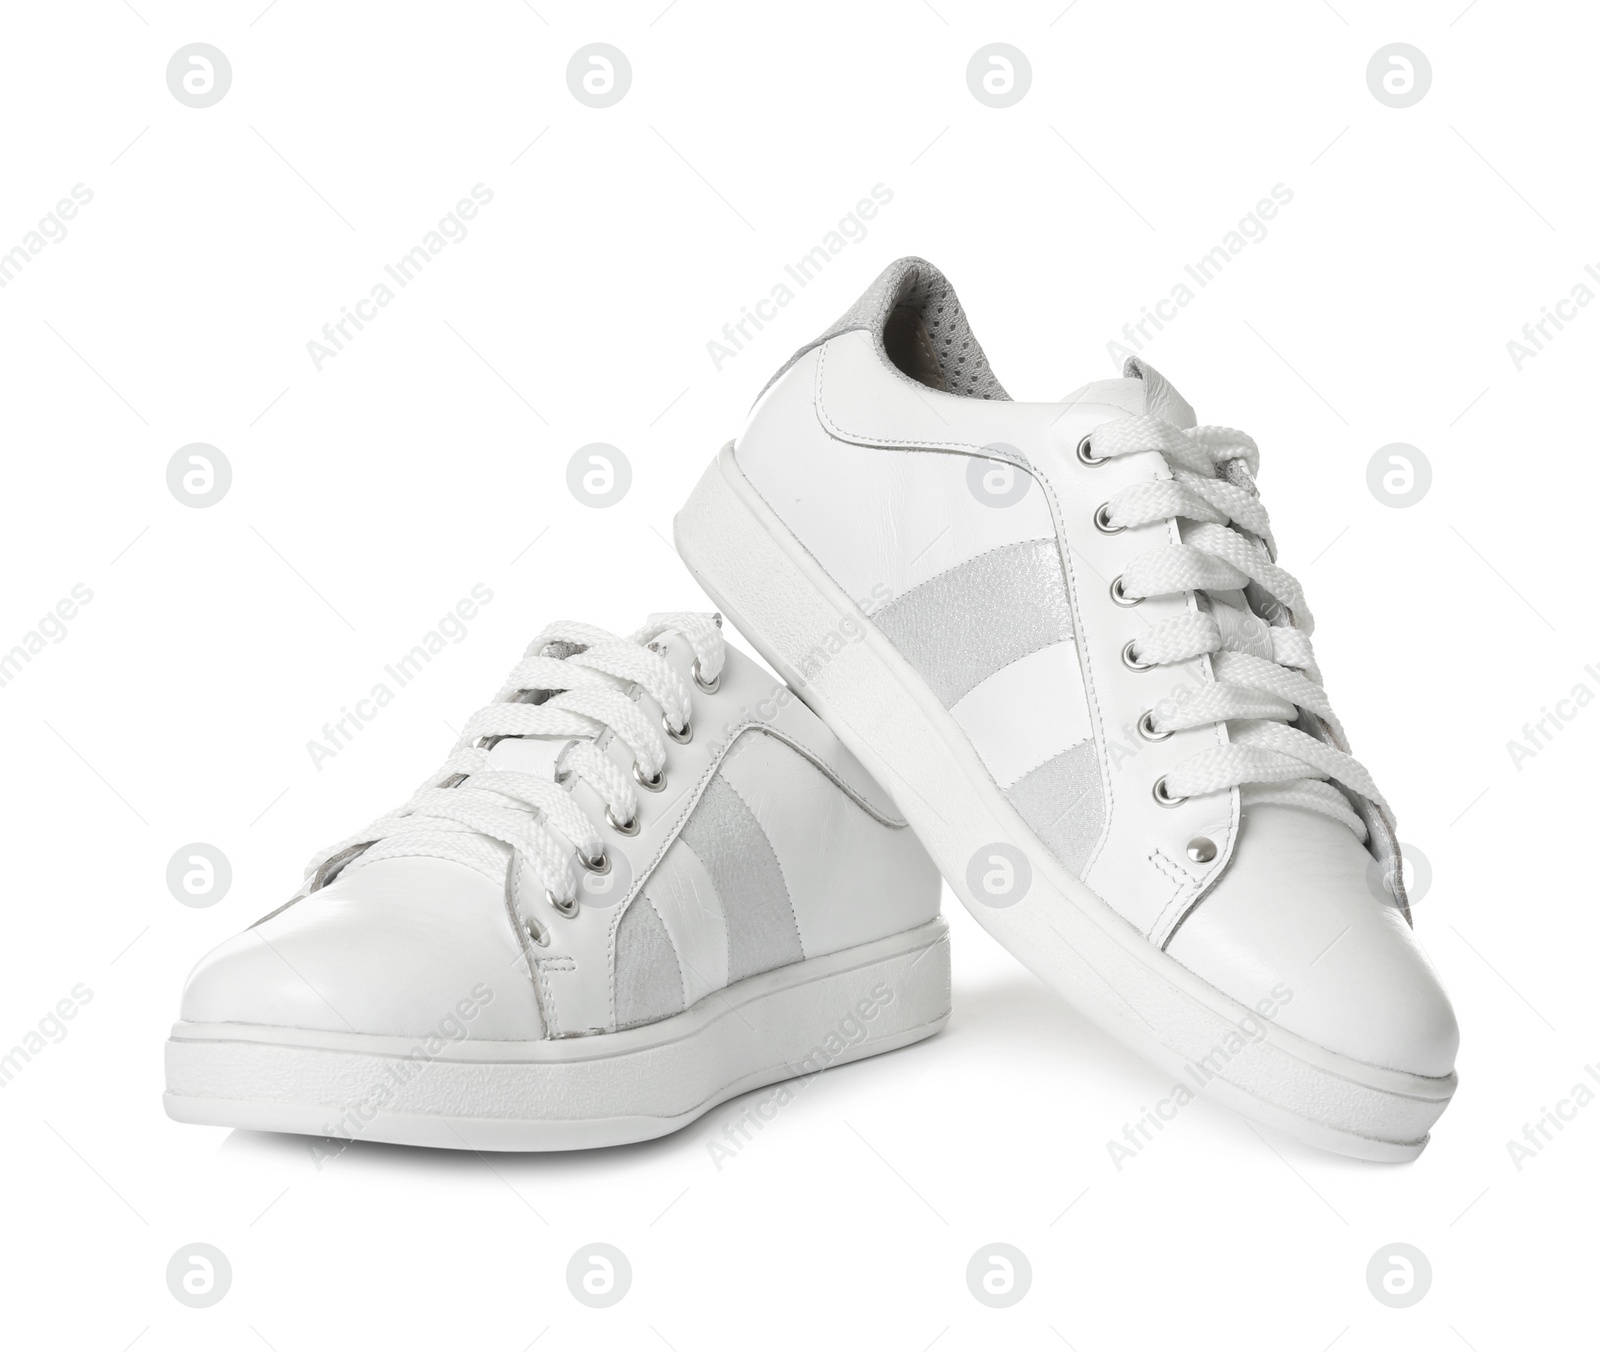 Photo of Pair of stylish modern shoes on white background